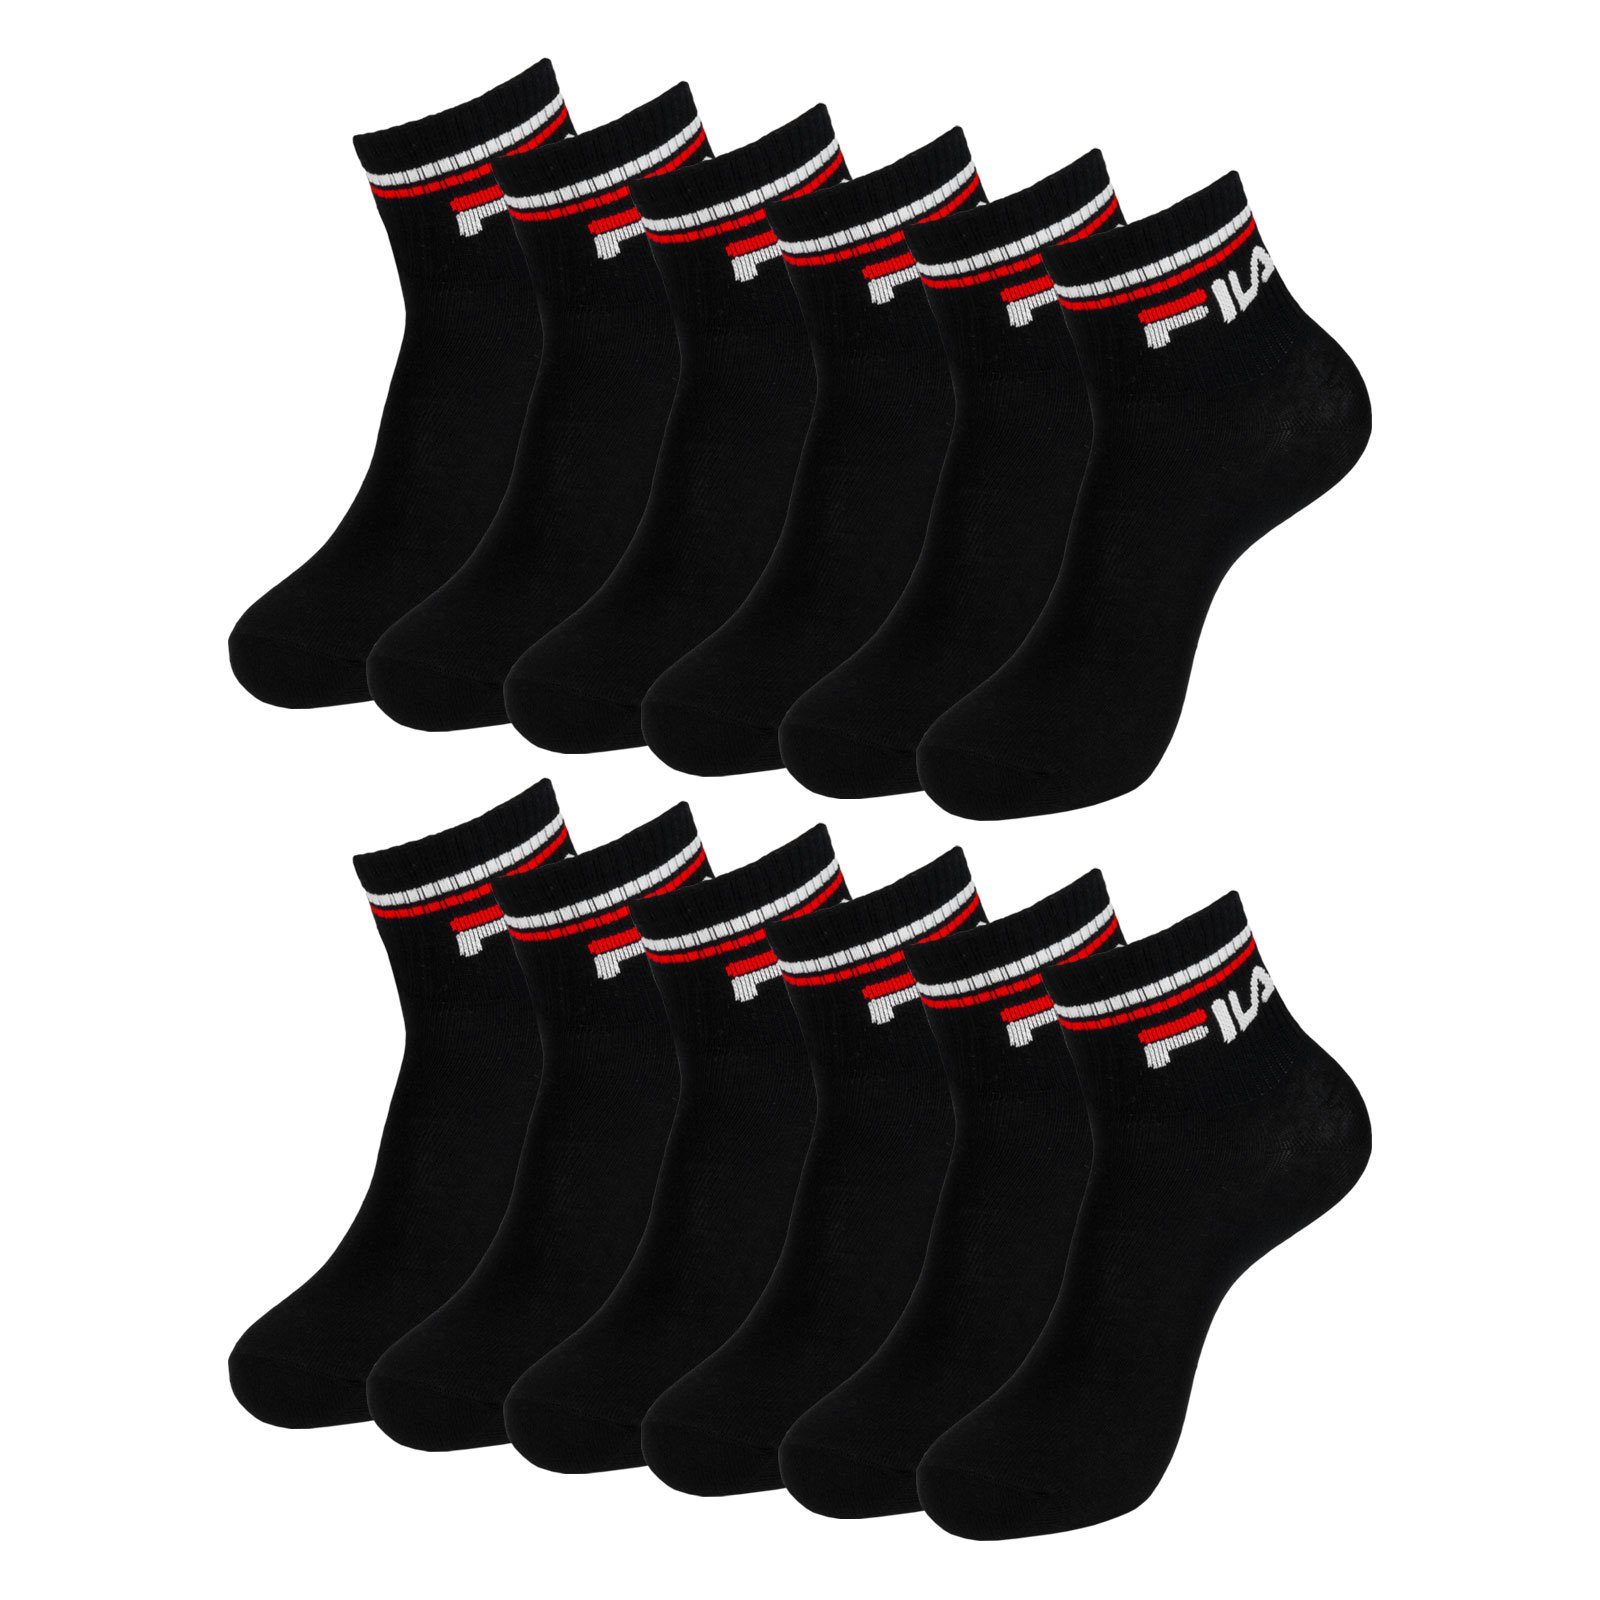 Fila Kurzsocken Quarter Socks black mit Look 200 sportlichen Rippbündchen Calza im (6-Paar)